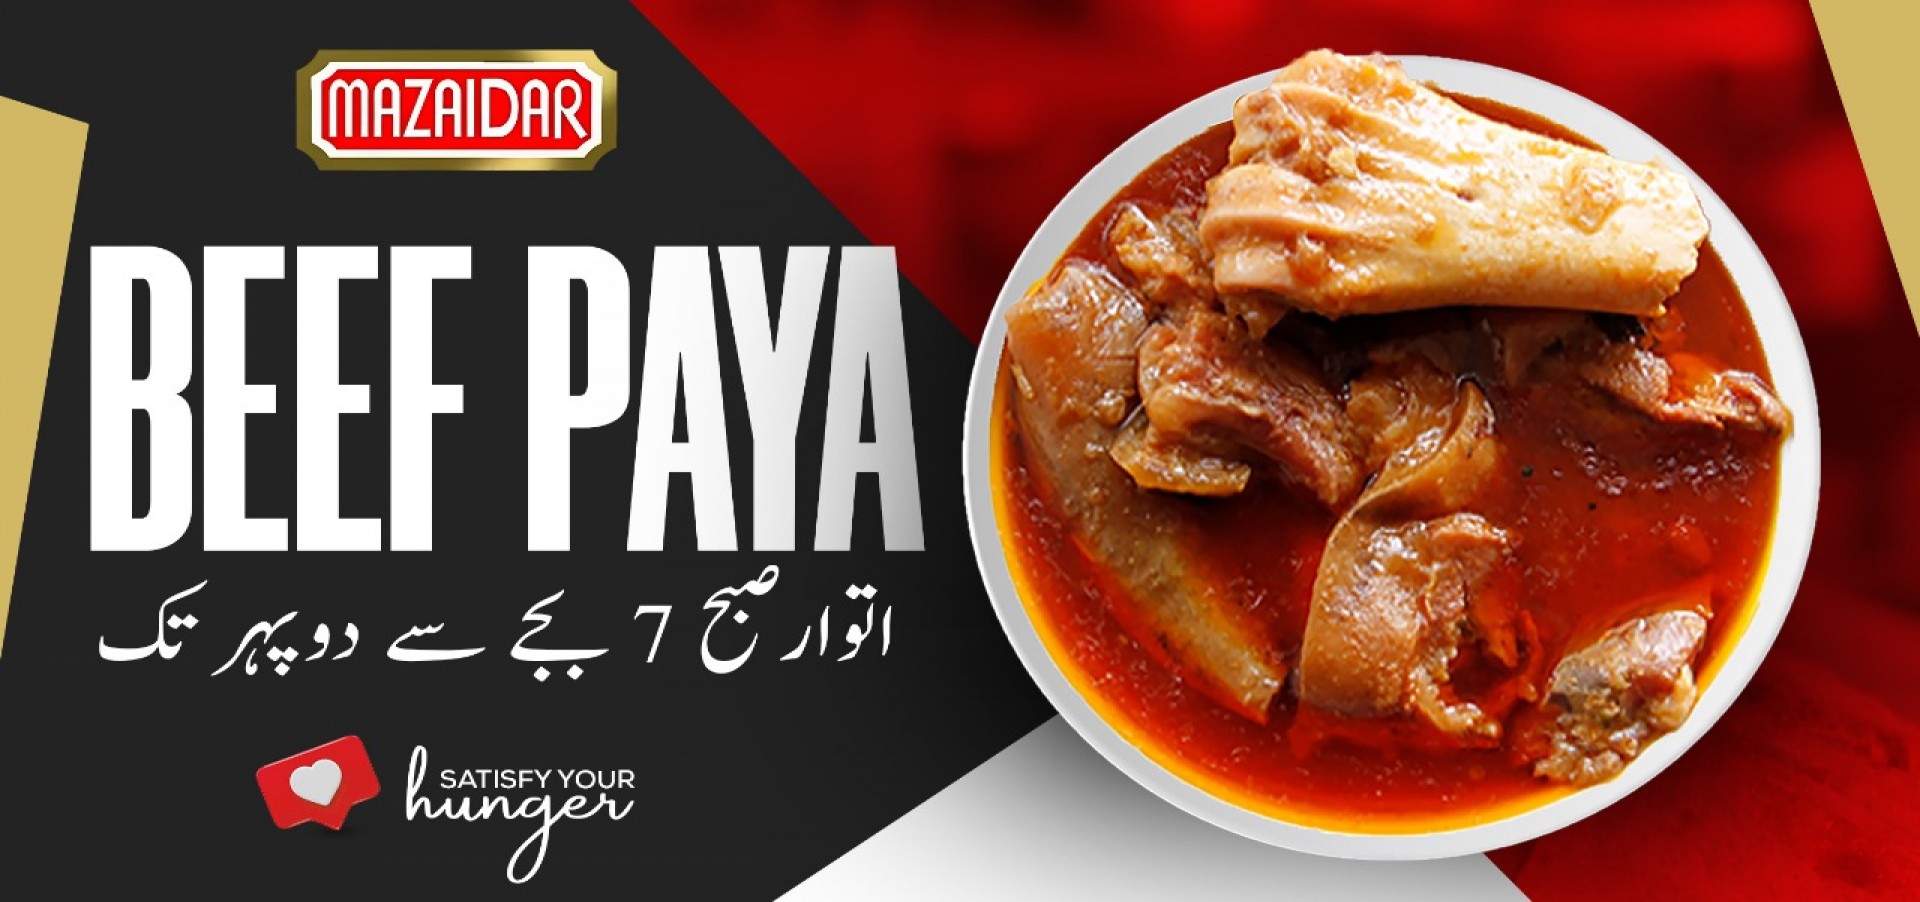 Mazaidar Beef Paya- Only Sunday Morning 